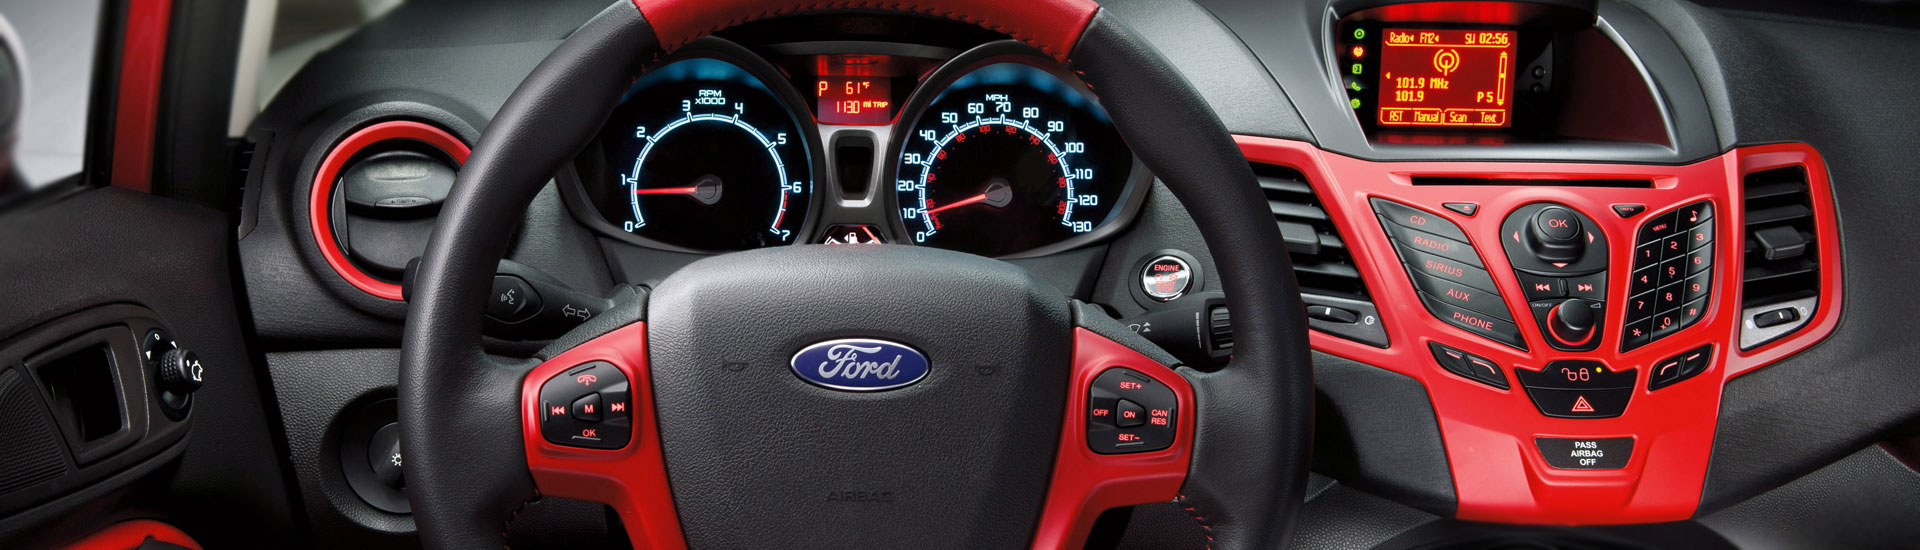 2015 Ford Focus Custom Dash Kits